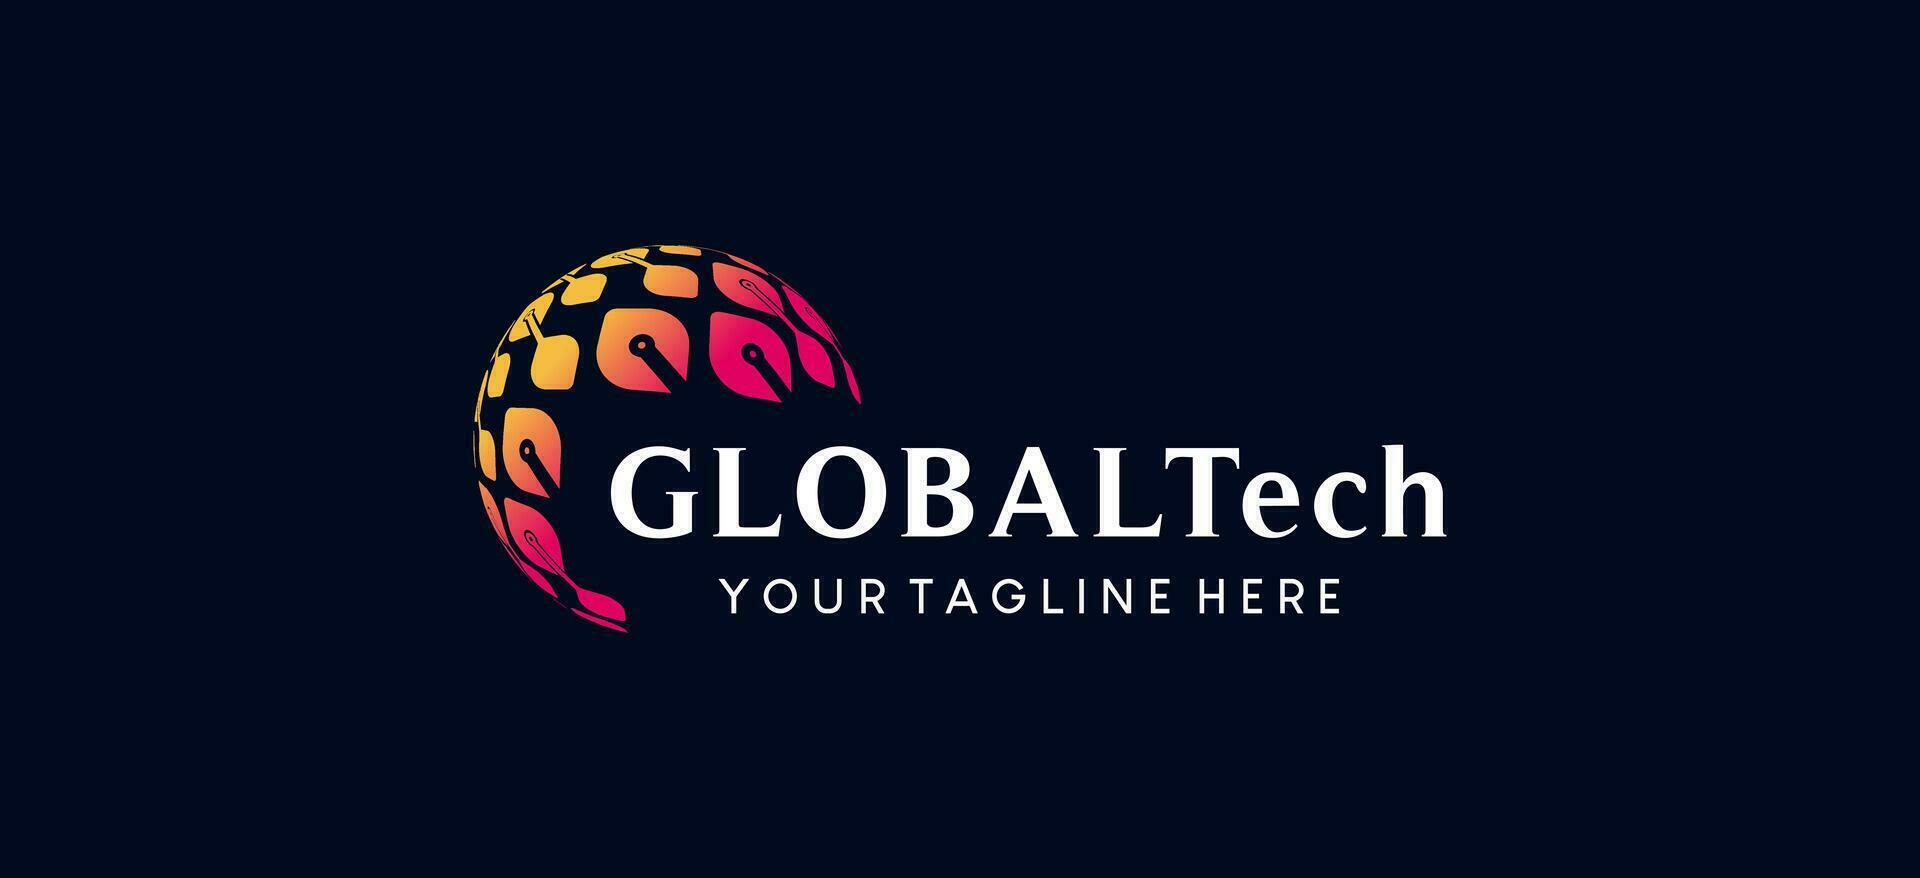 Technology globe logo design template, abstract globe vector illustration